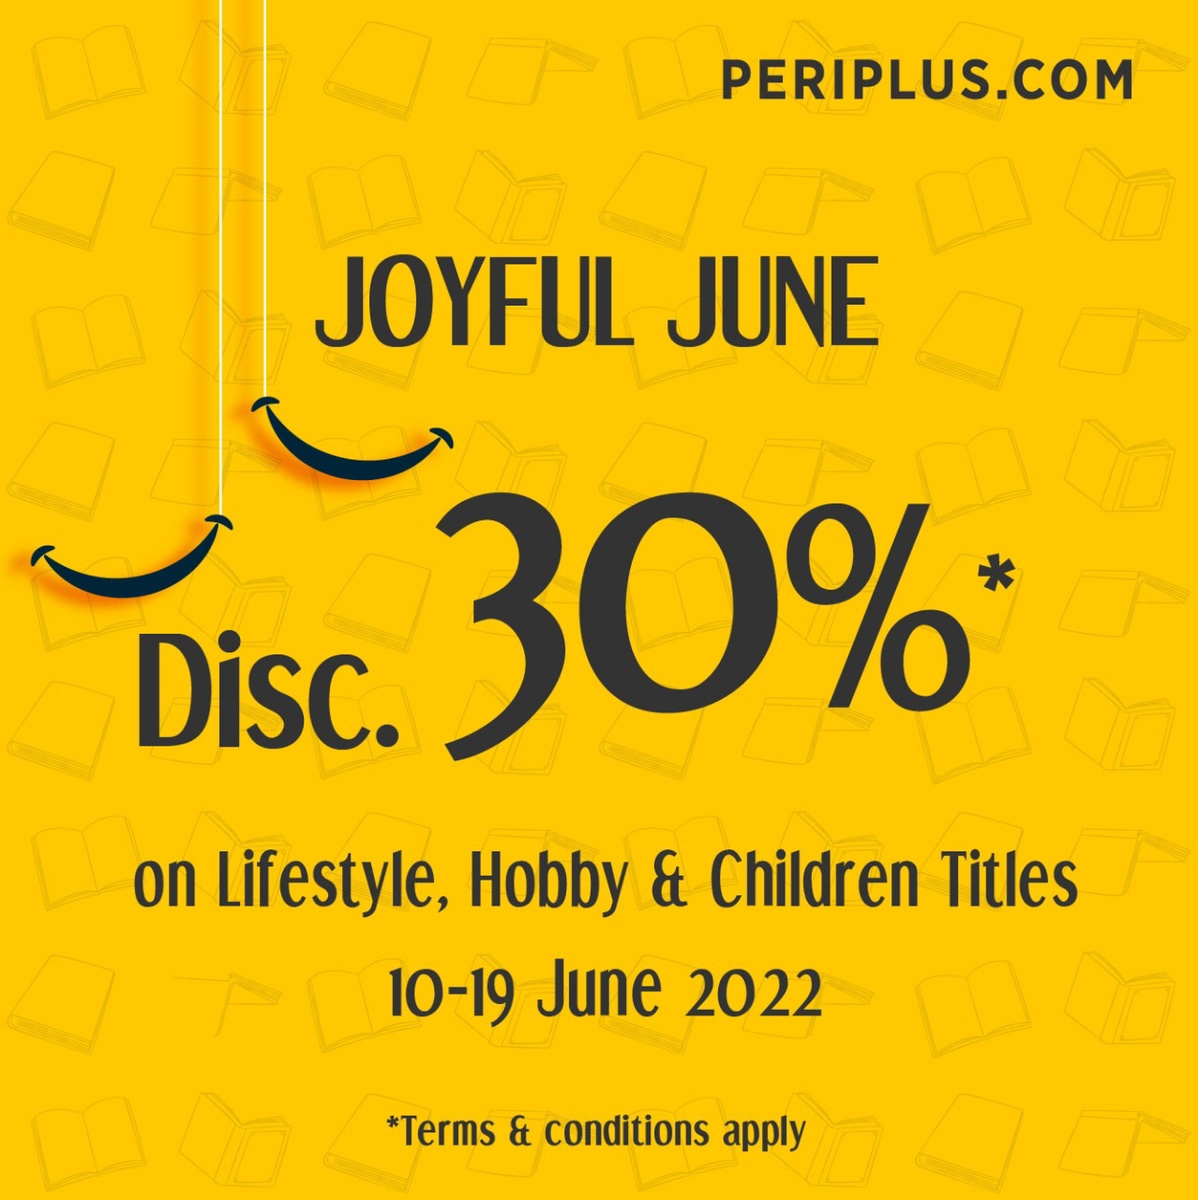 Promo Periplus JOYFUL JUNE - GET 30% on Lifestyle, Hobby & Children Titles